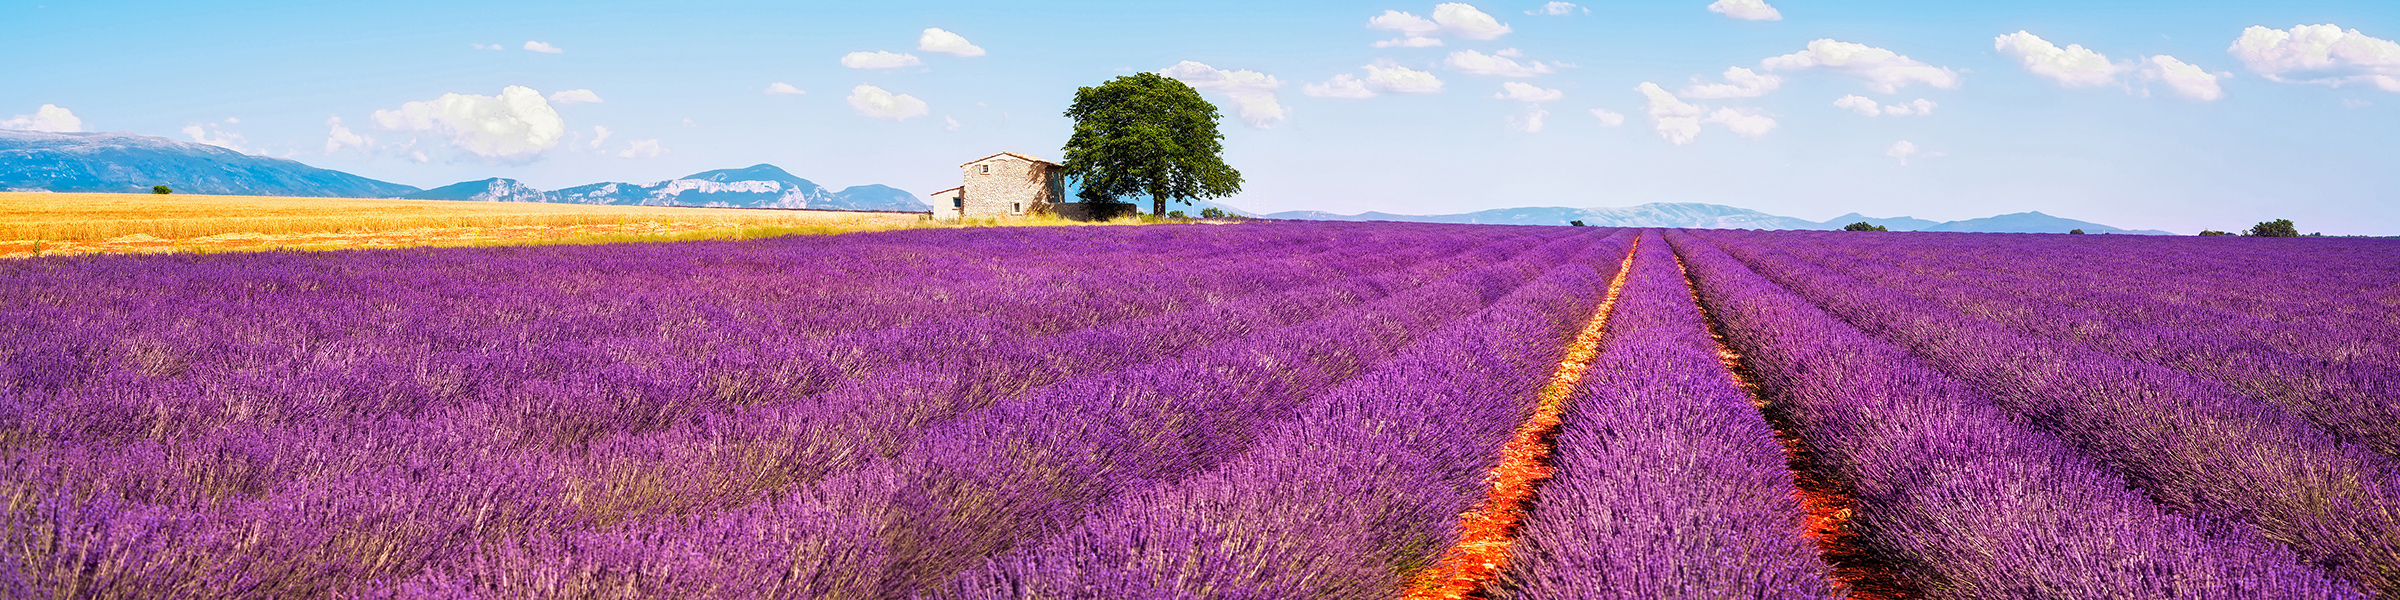 France Provence Lavender Field